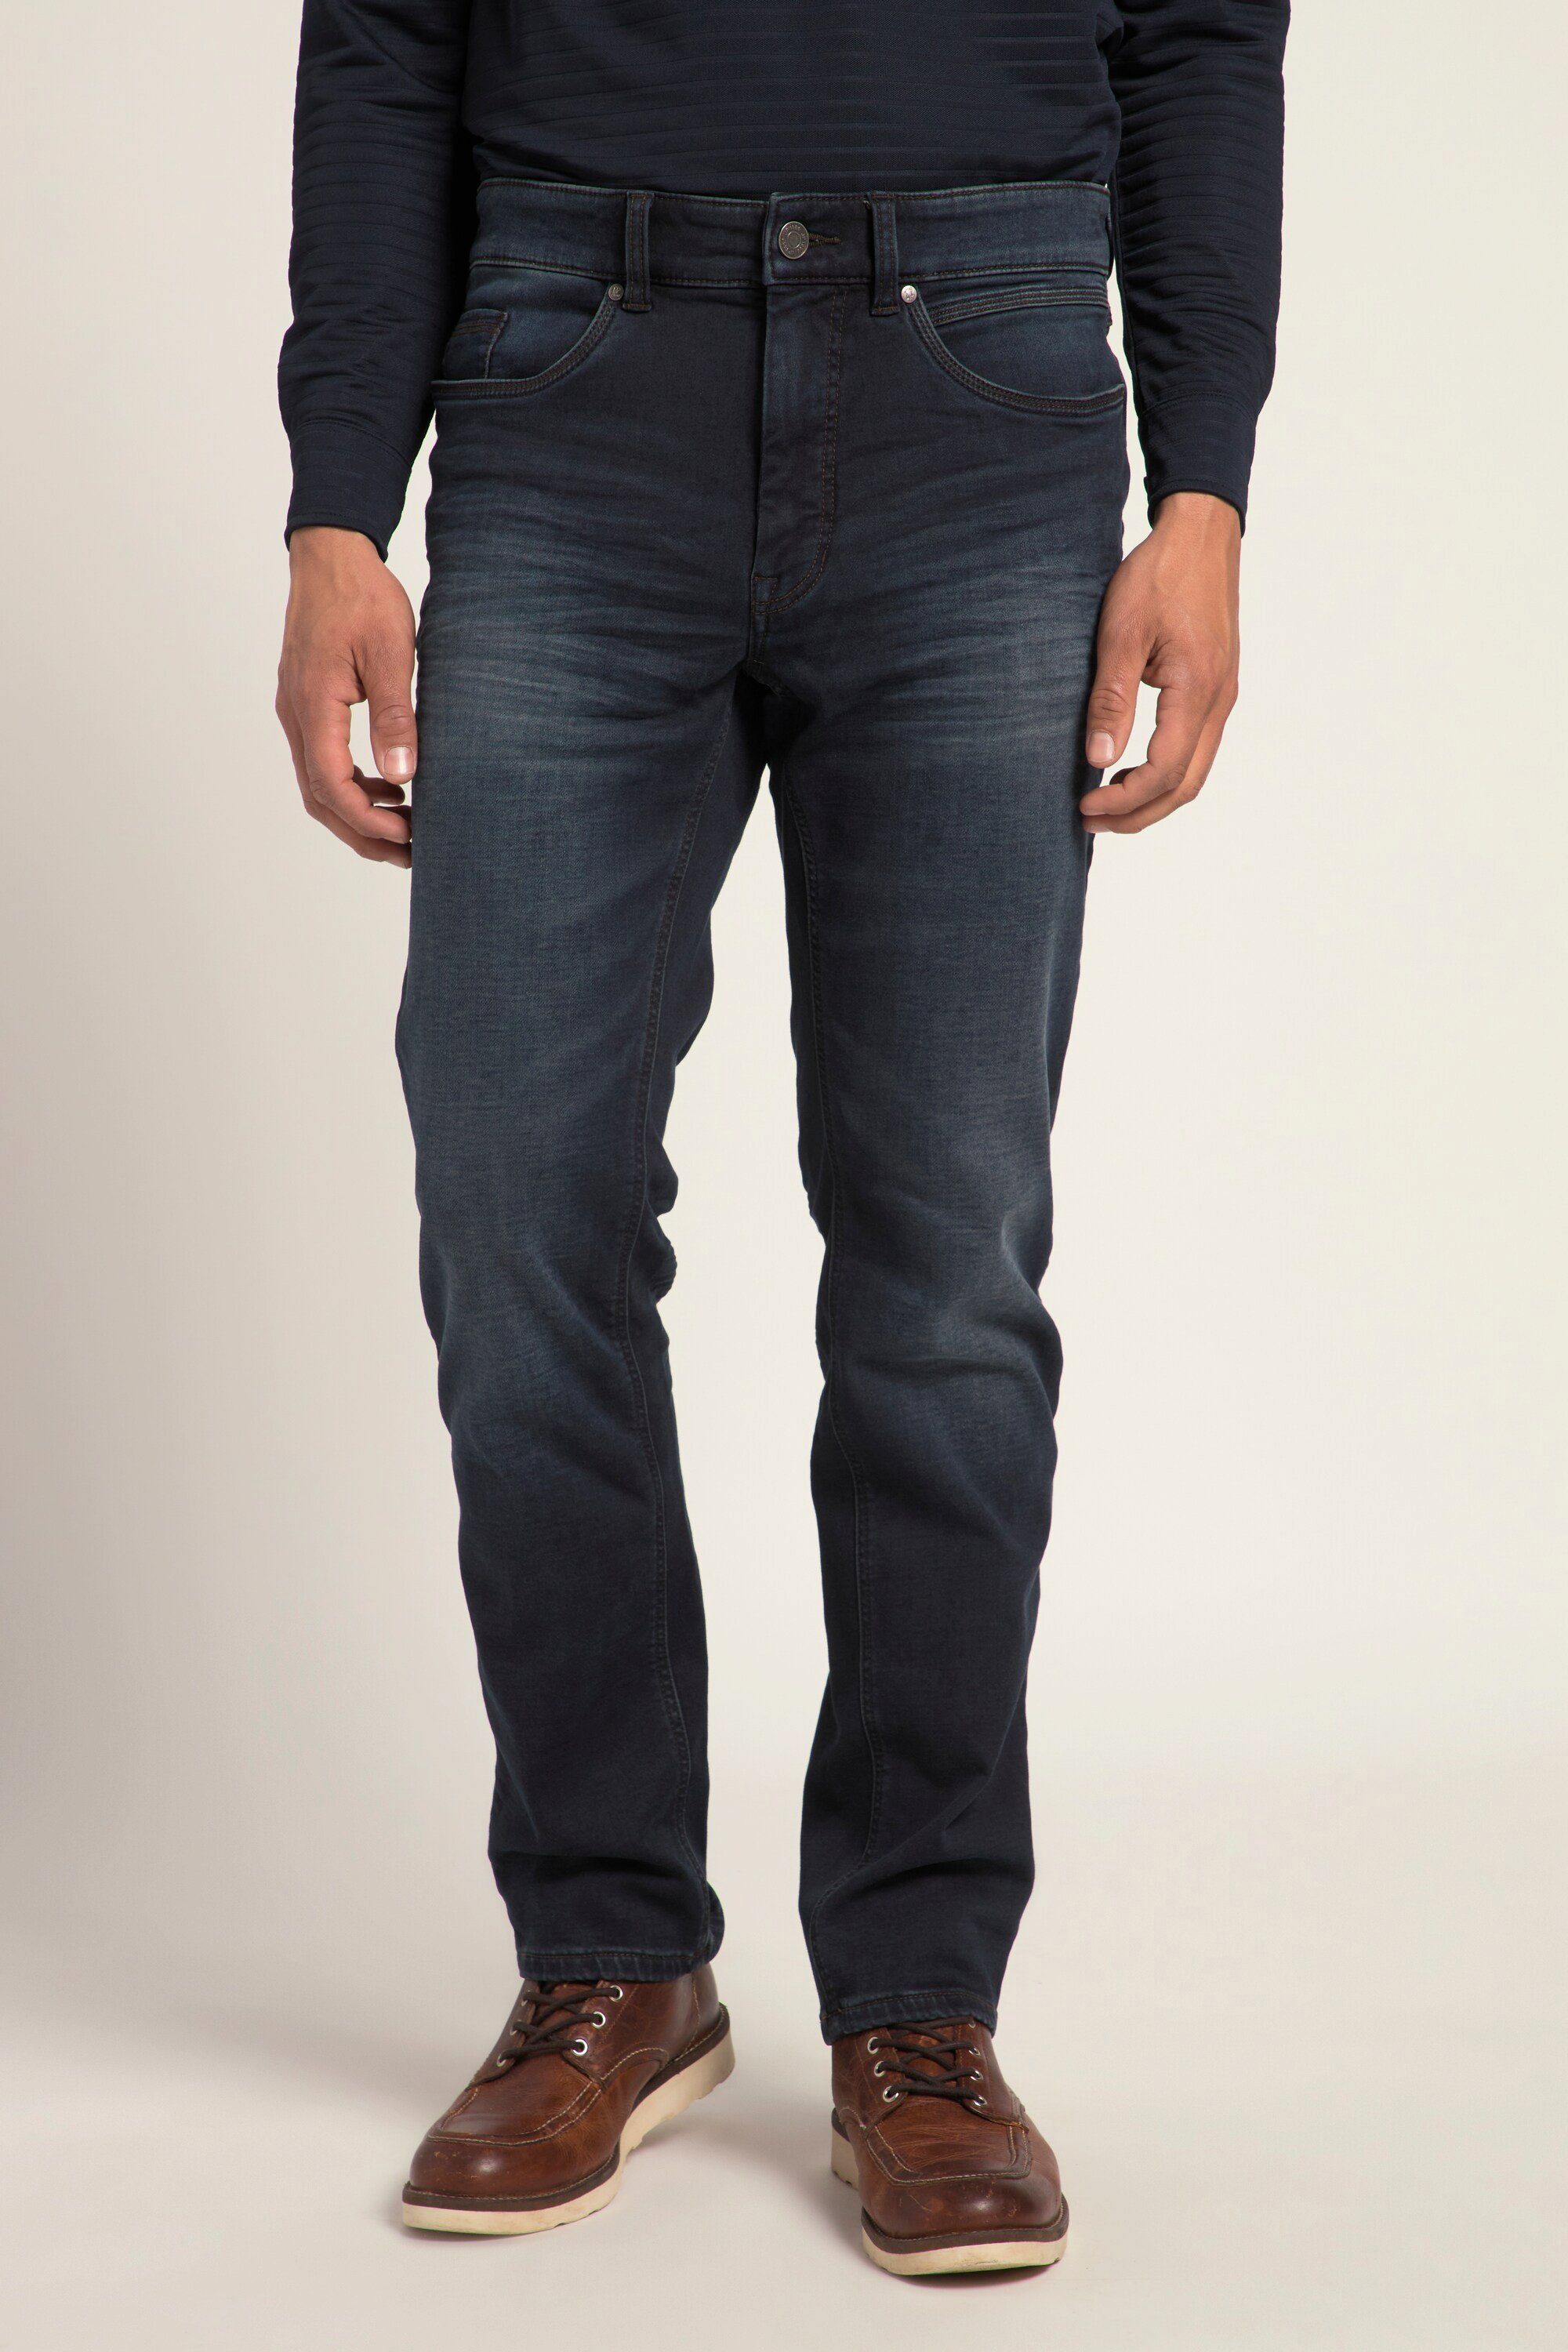 denim Fit FLEXNAMIC® Straight blue JP1880 Denim dark 5-Pocket Jeans Cargohose